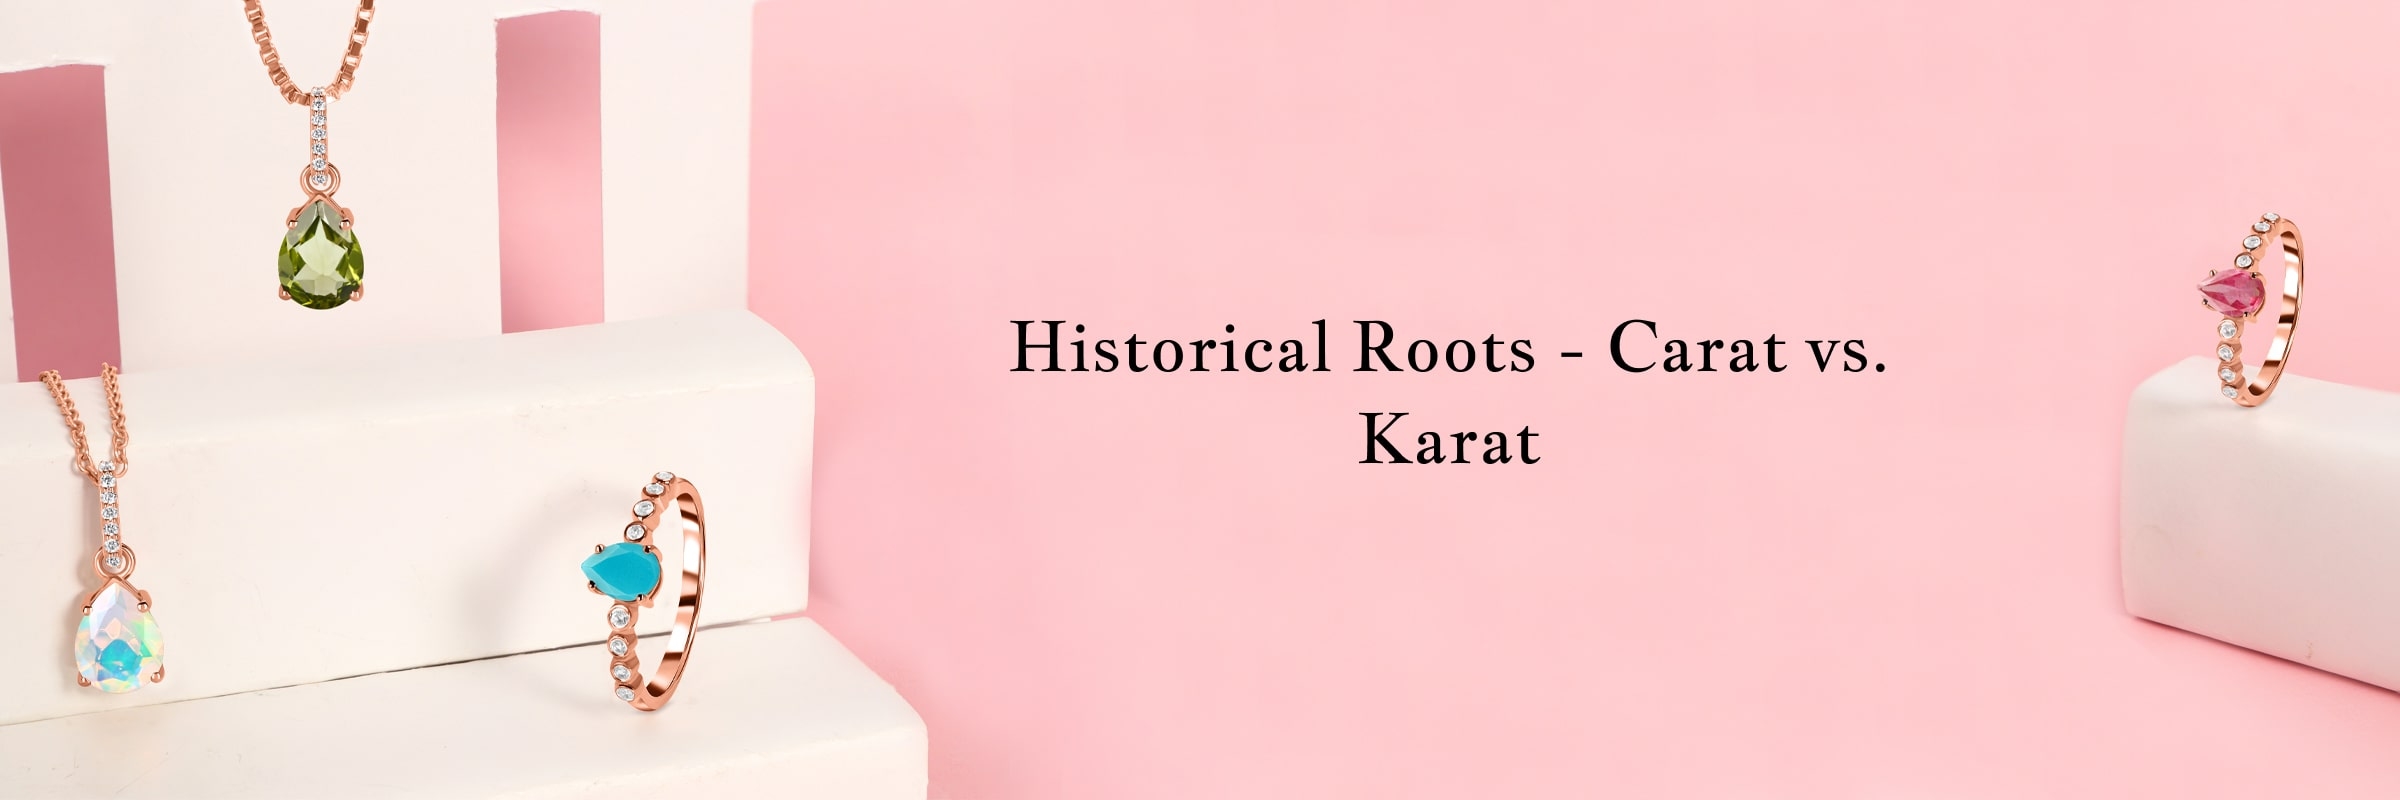 Origins of Karat Vs. Carat